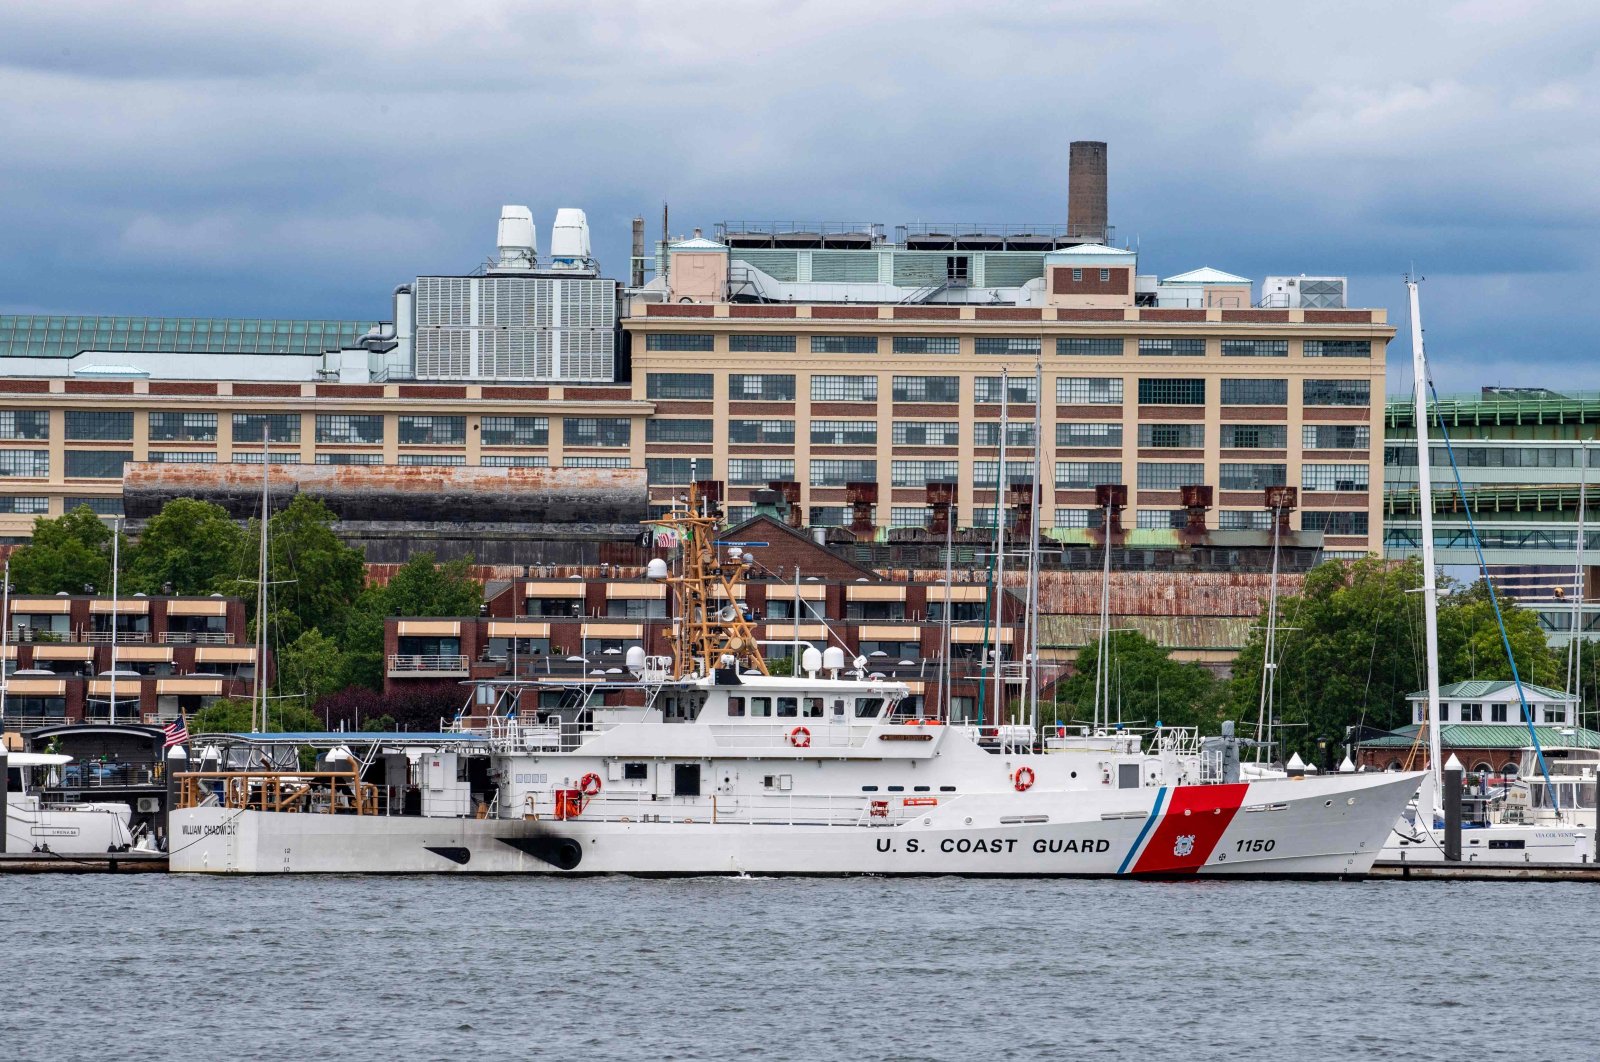 A U.S. Coast Guard vessel sits in port in Boston Harbor across from the US Coast Guard Station Boston in Boston, Massachusetts, June 19, 2022. (AFP Photo)